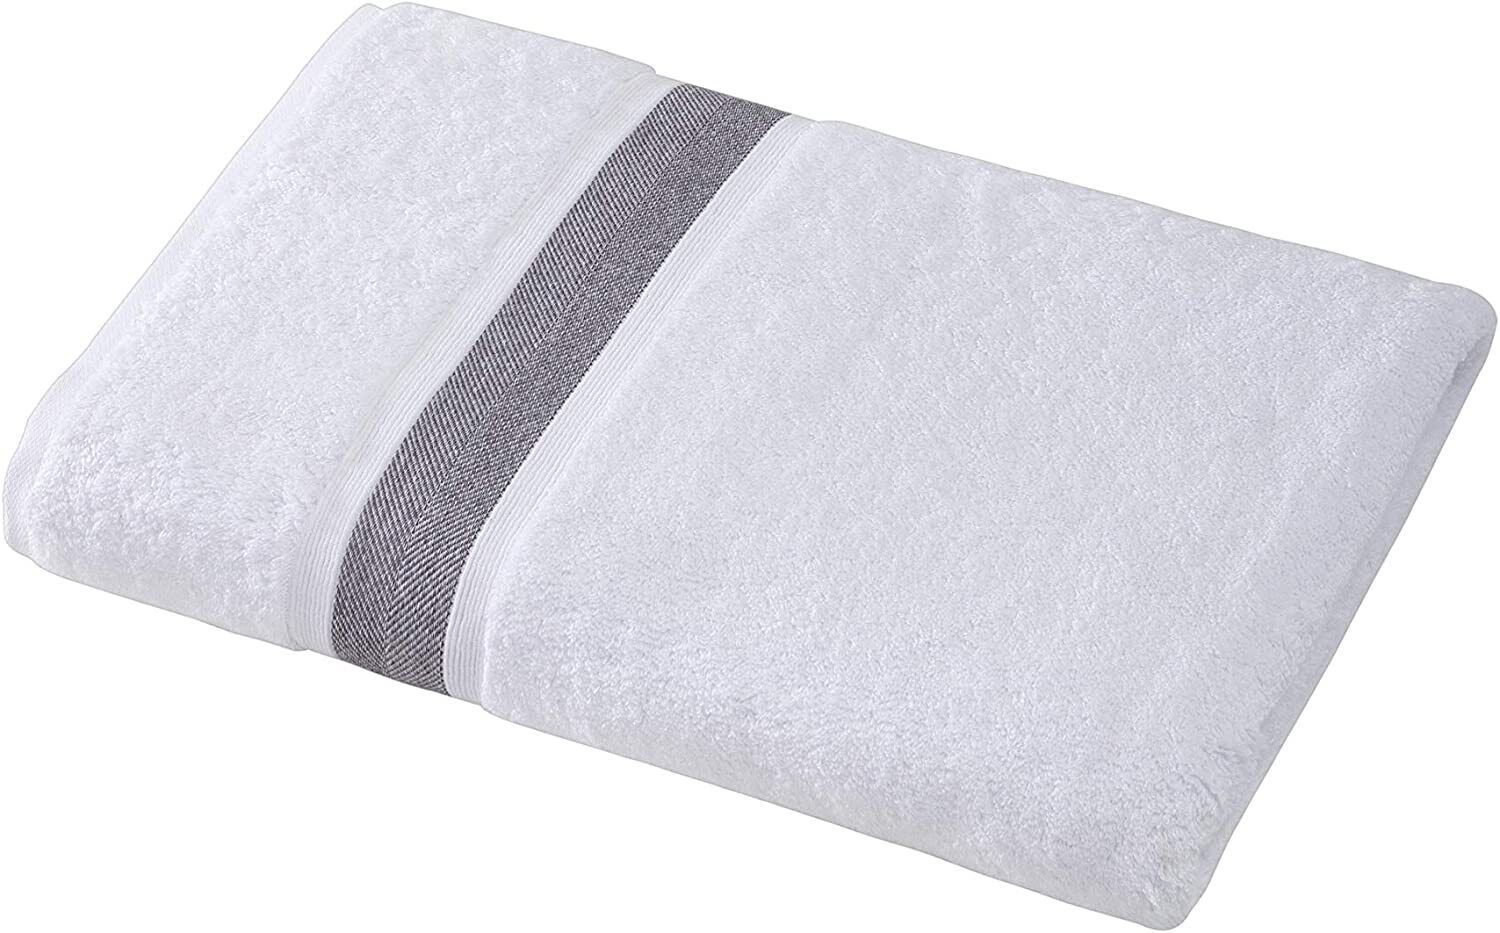 Large Bath Towels 100% Cotton Turkish Bath Towel 35x67 Anthracite White